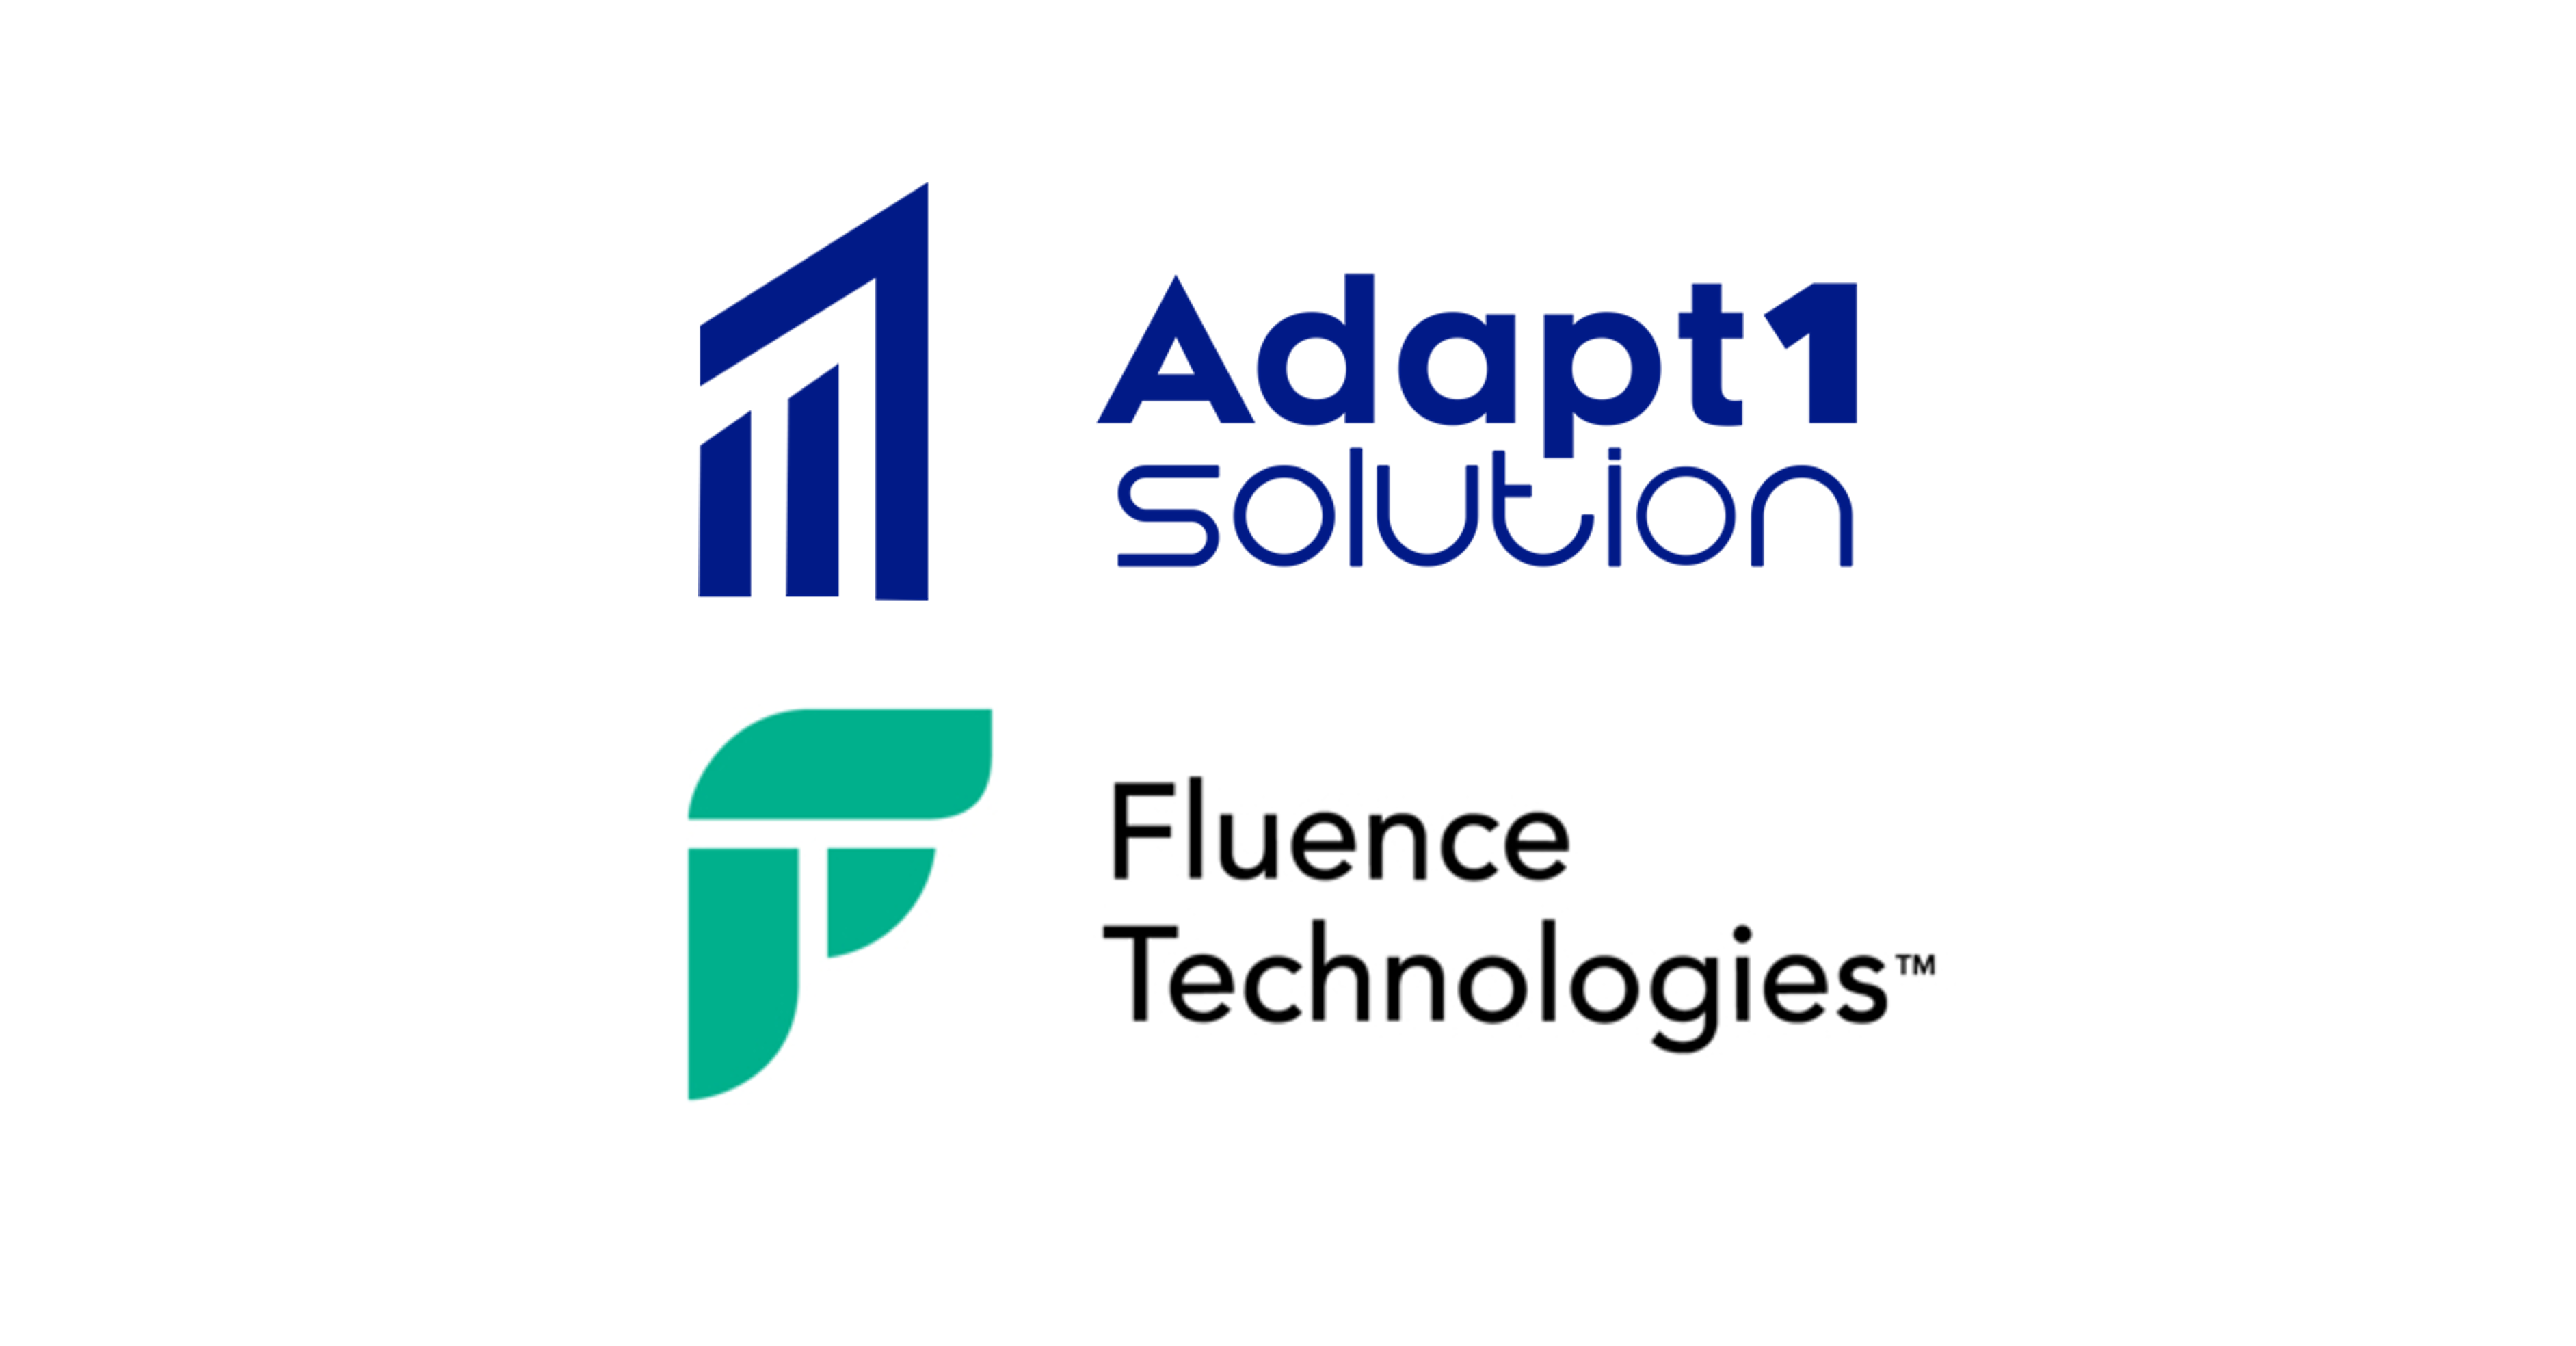 Fluence Technologies